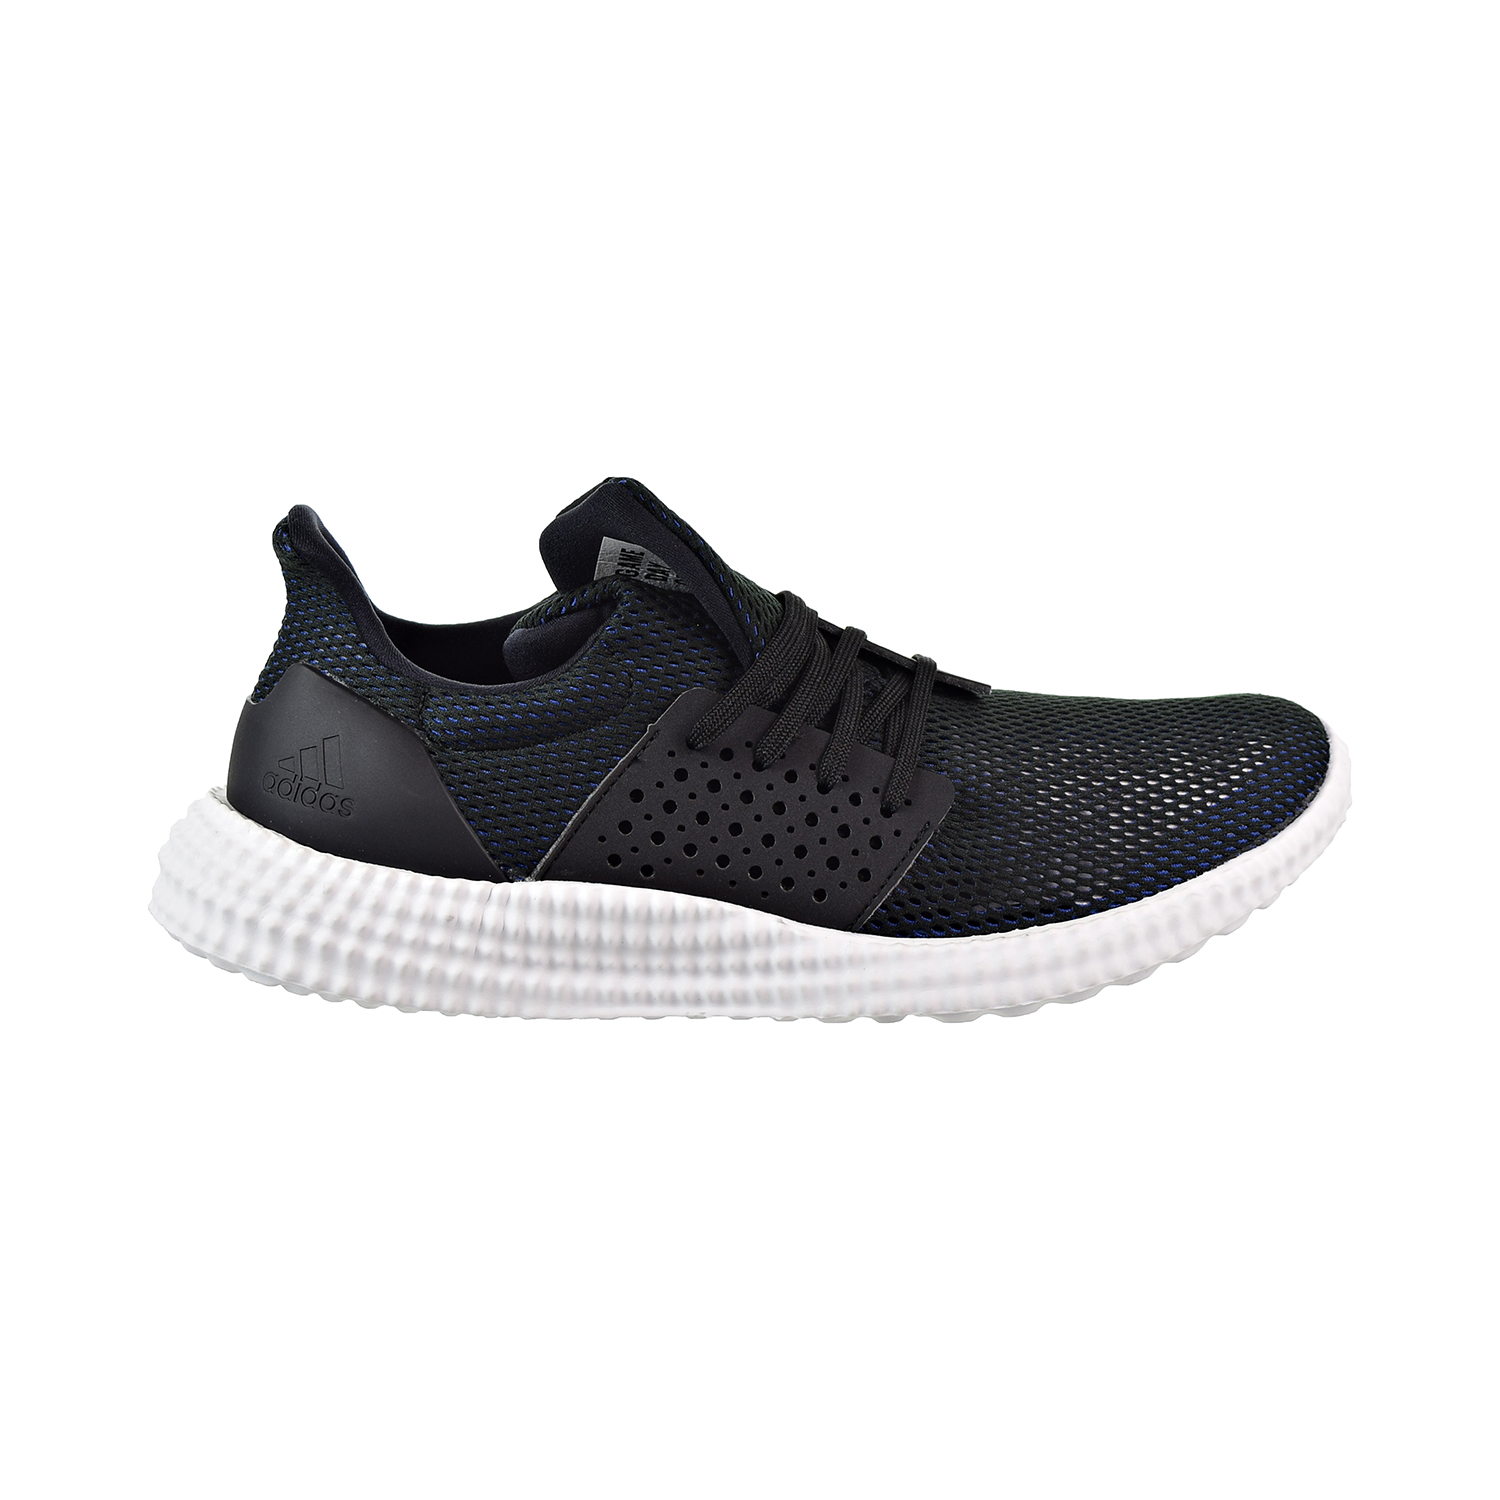 Adidas Athletics 24-7 Training Mens' Shoes Black-Blue cg3448 | eBay